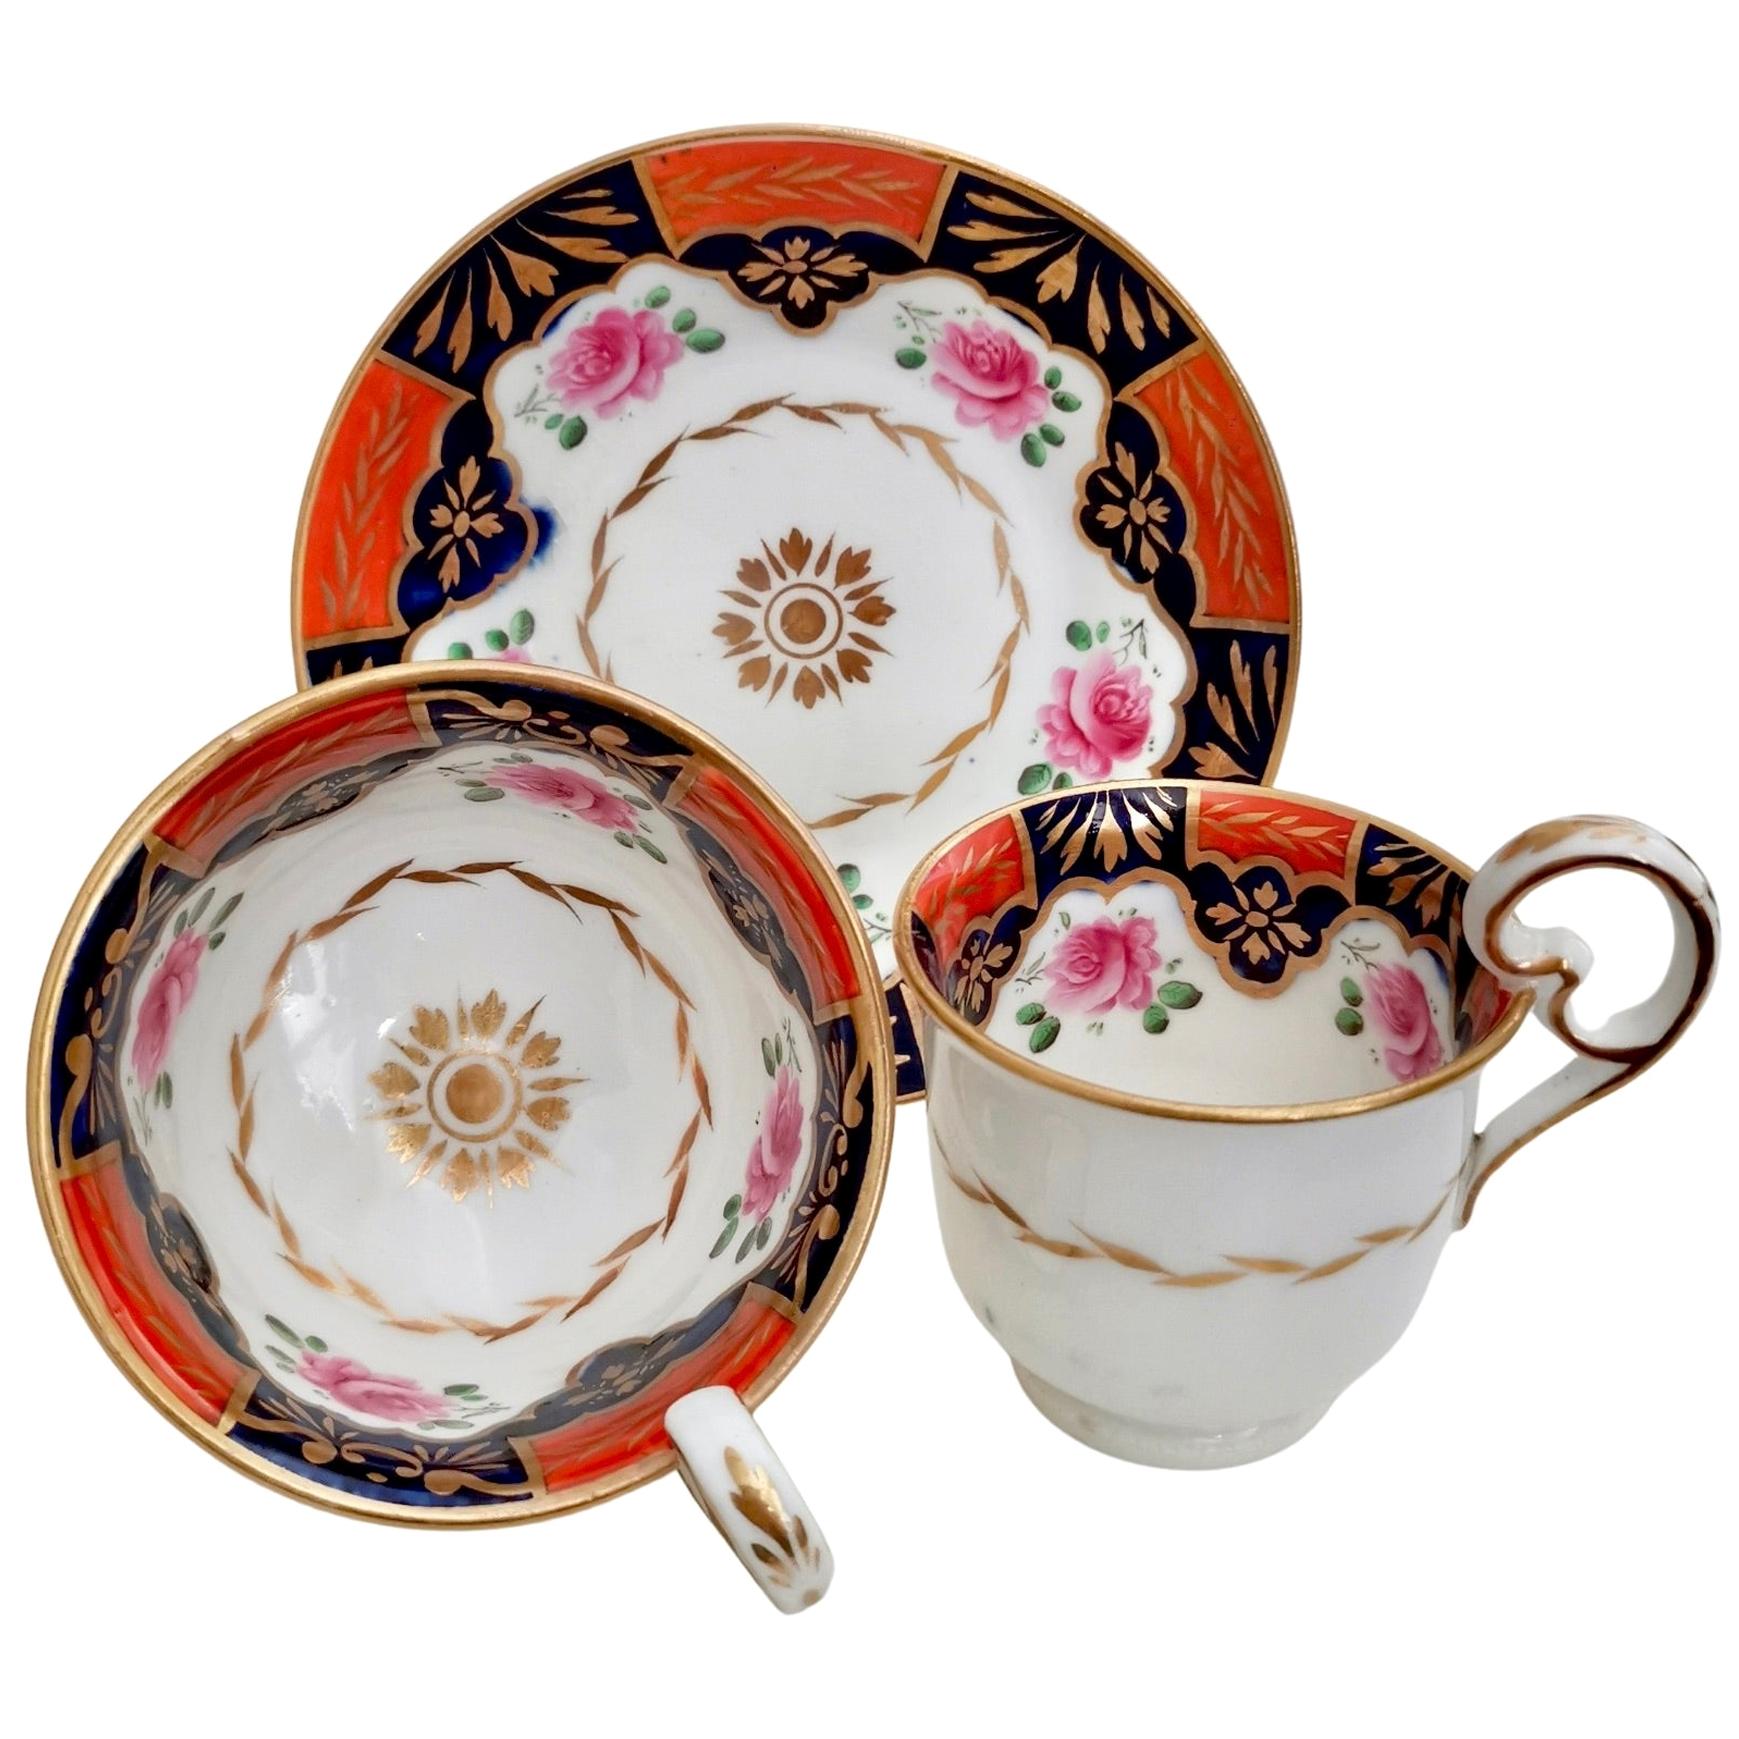 Coalport Porcelain Teacup Trio, Orange with Roses, Regency, circa 1820